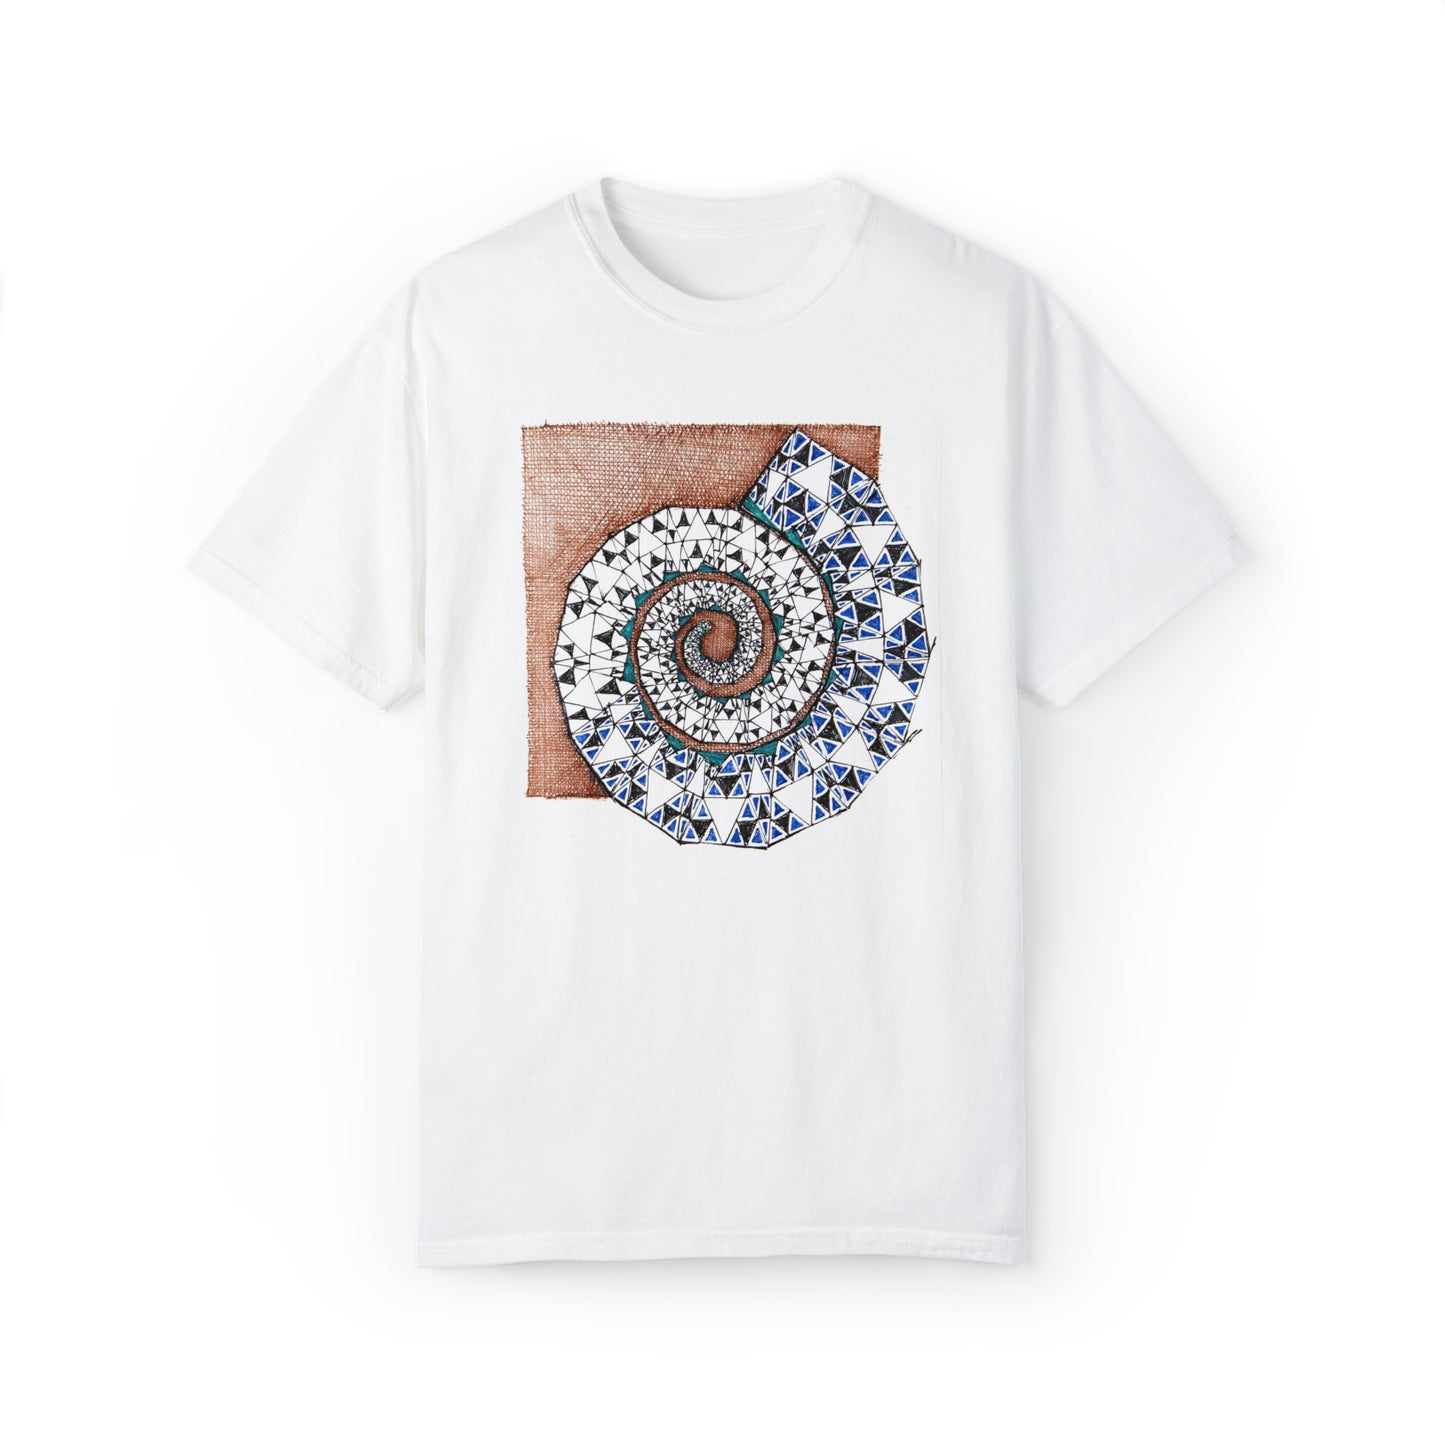 Fractal Nautilus T-shirt - By Bill Fleming